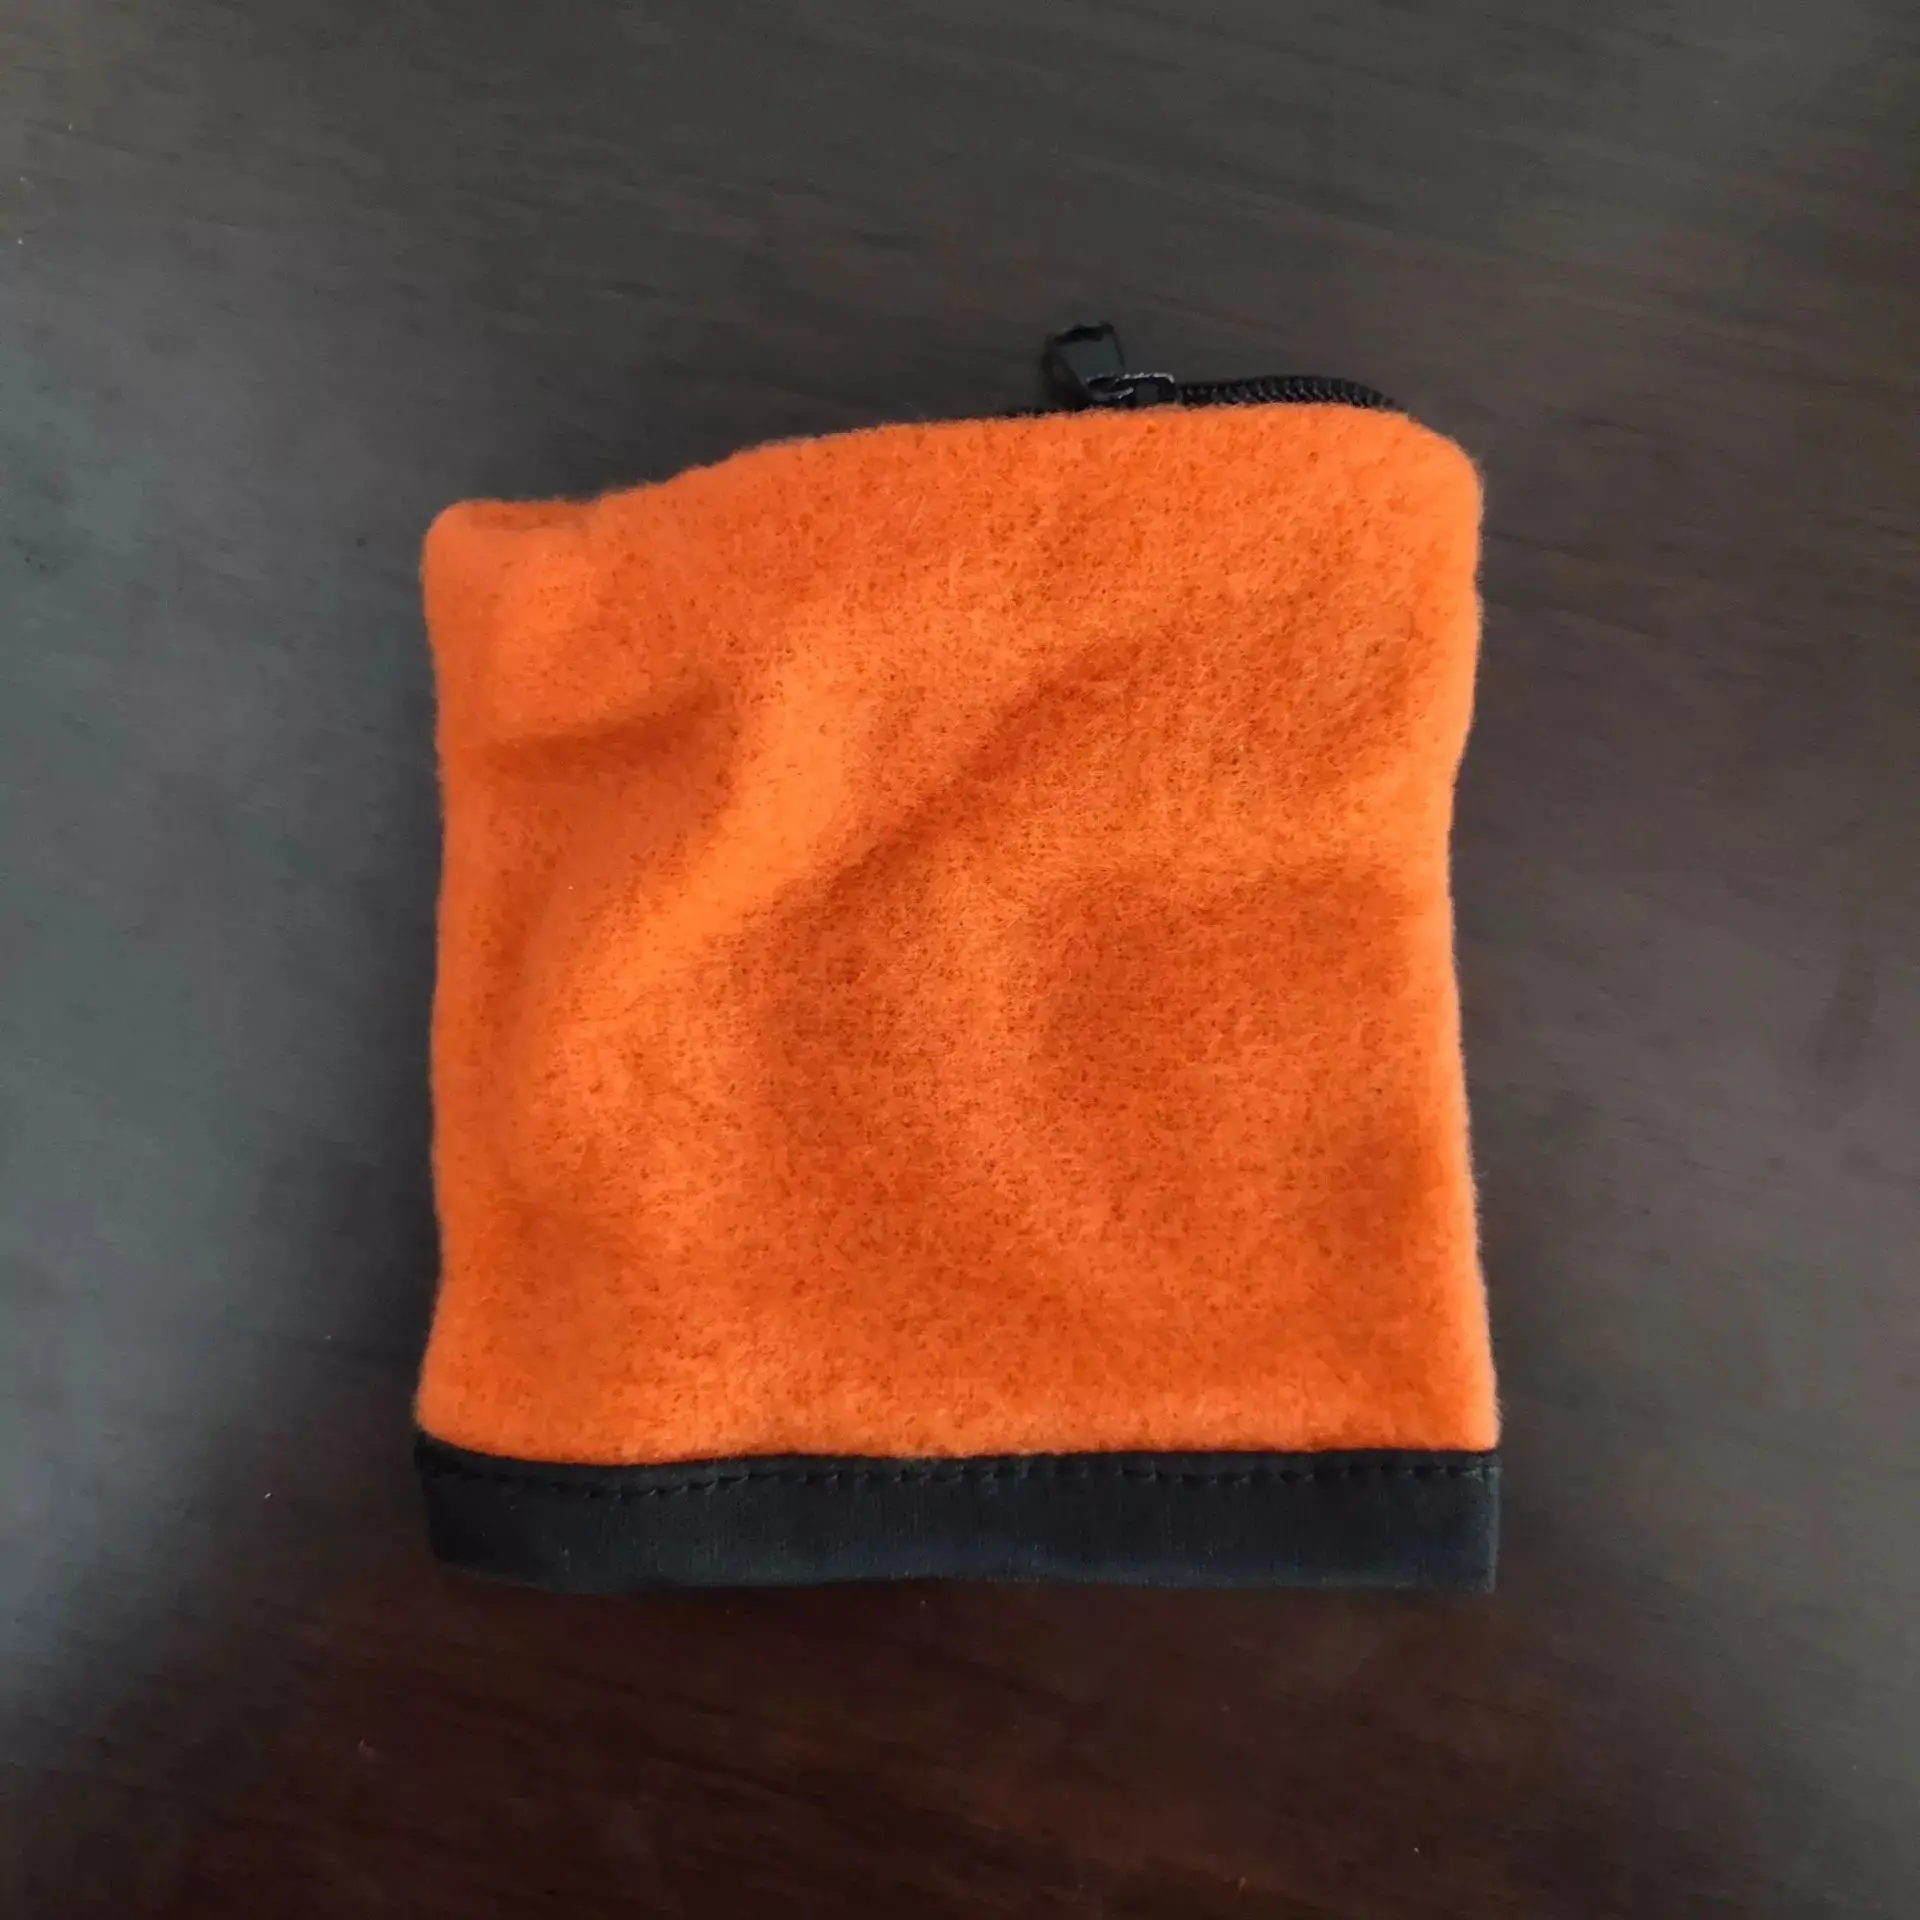 WAC Zipper Fleece Wrist Wallet Pouch Arm Band Bag For MP3 Key Card Storage  Bag Case wangcc